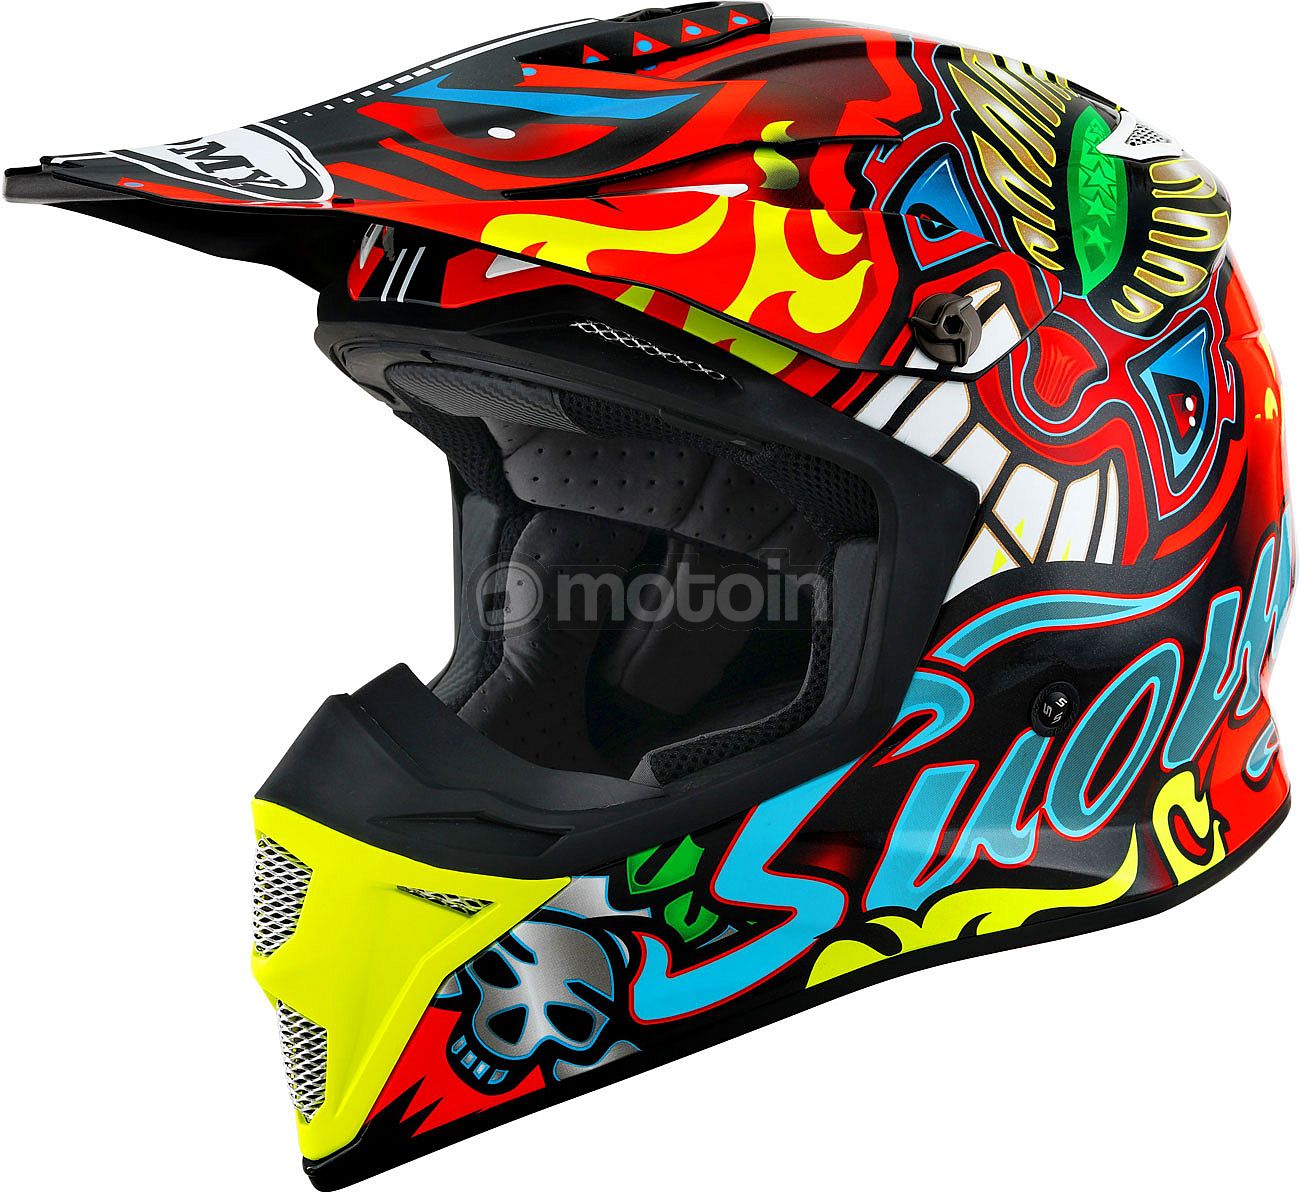 Suomy MX Speed Pro Tribal, casco incrociato Mips